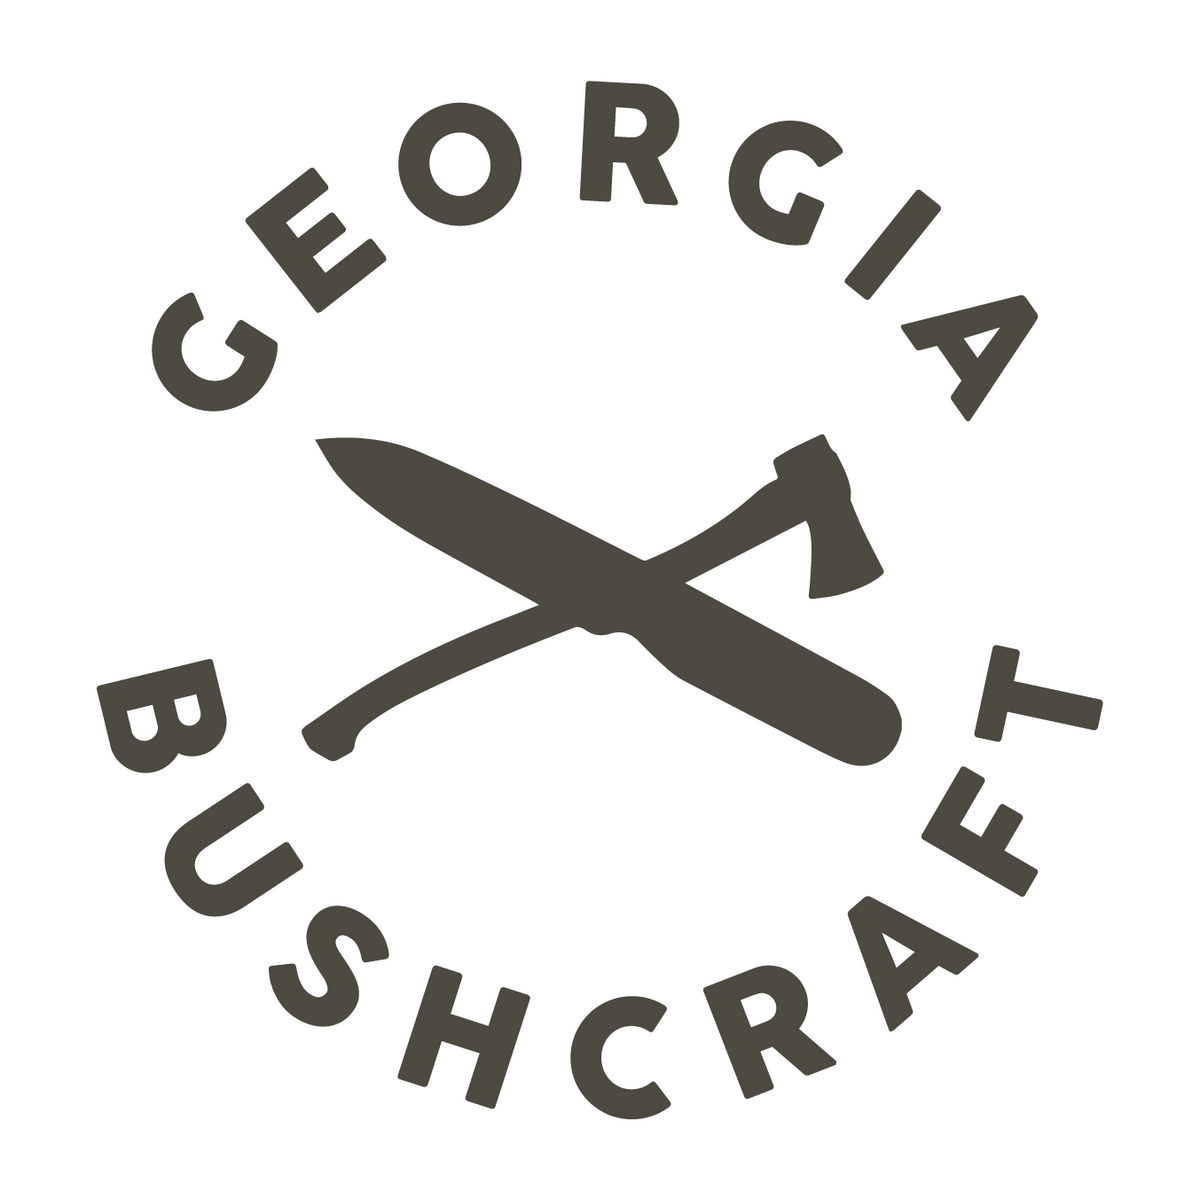 www.georgiabushcraft.com